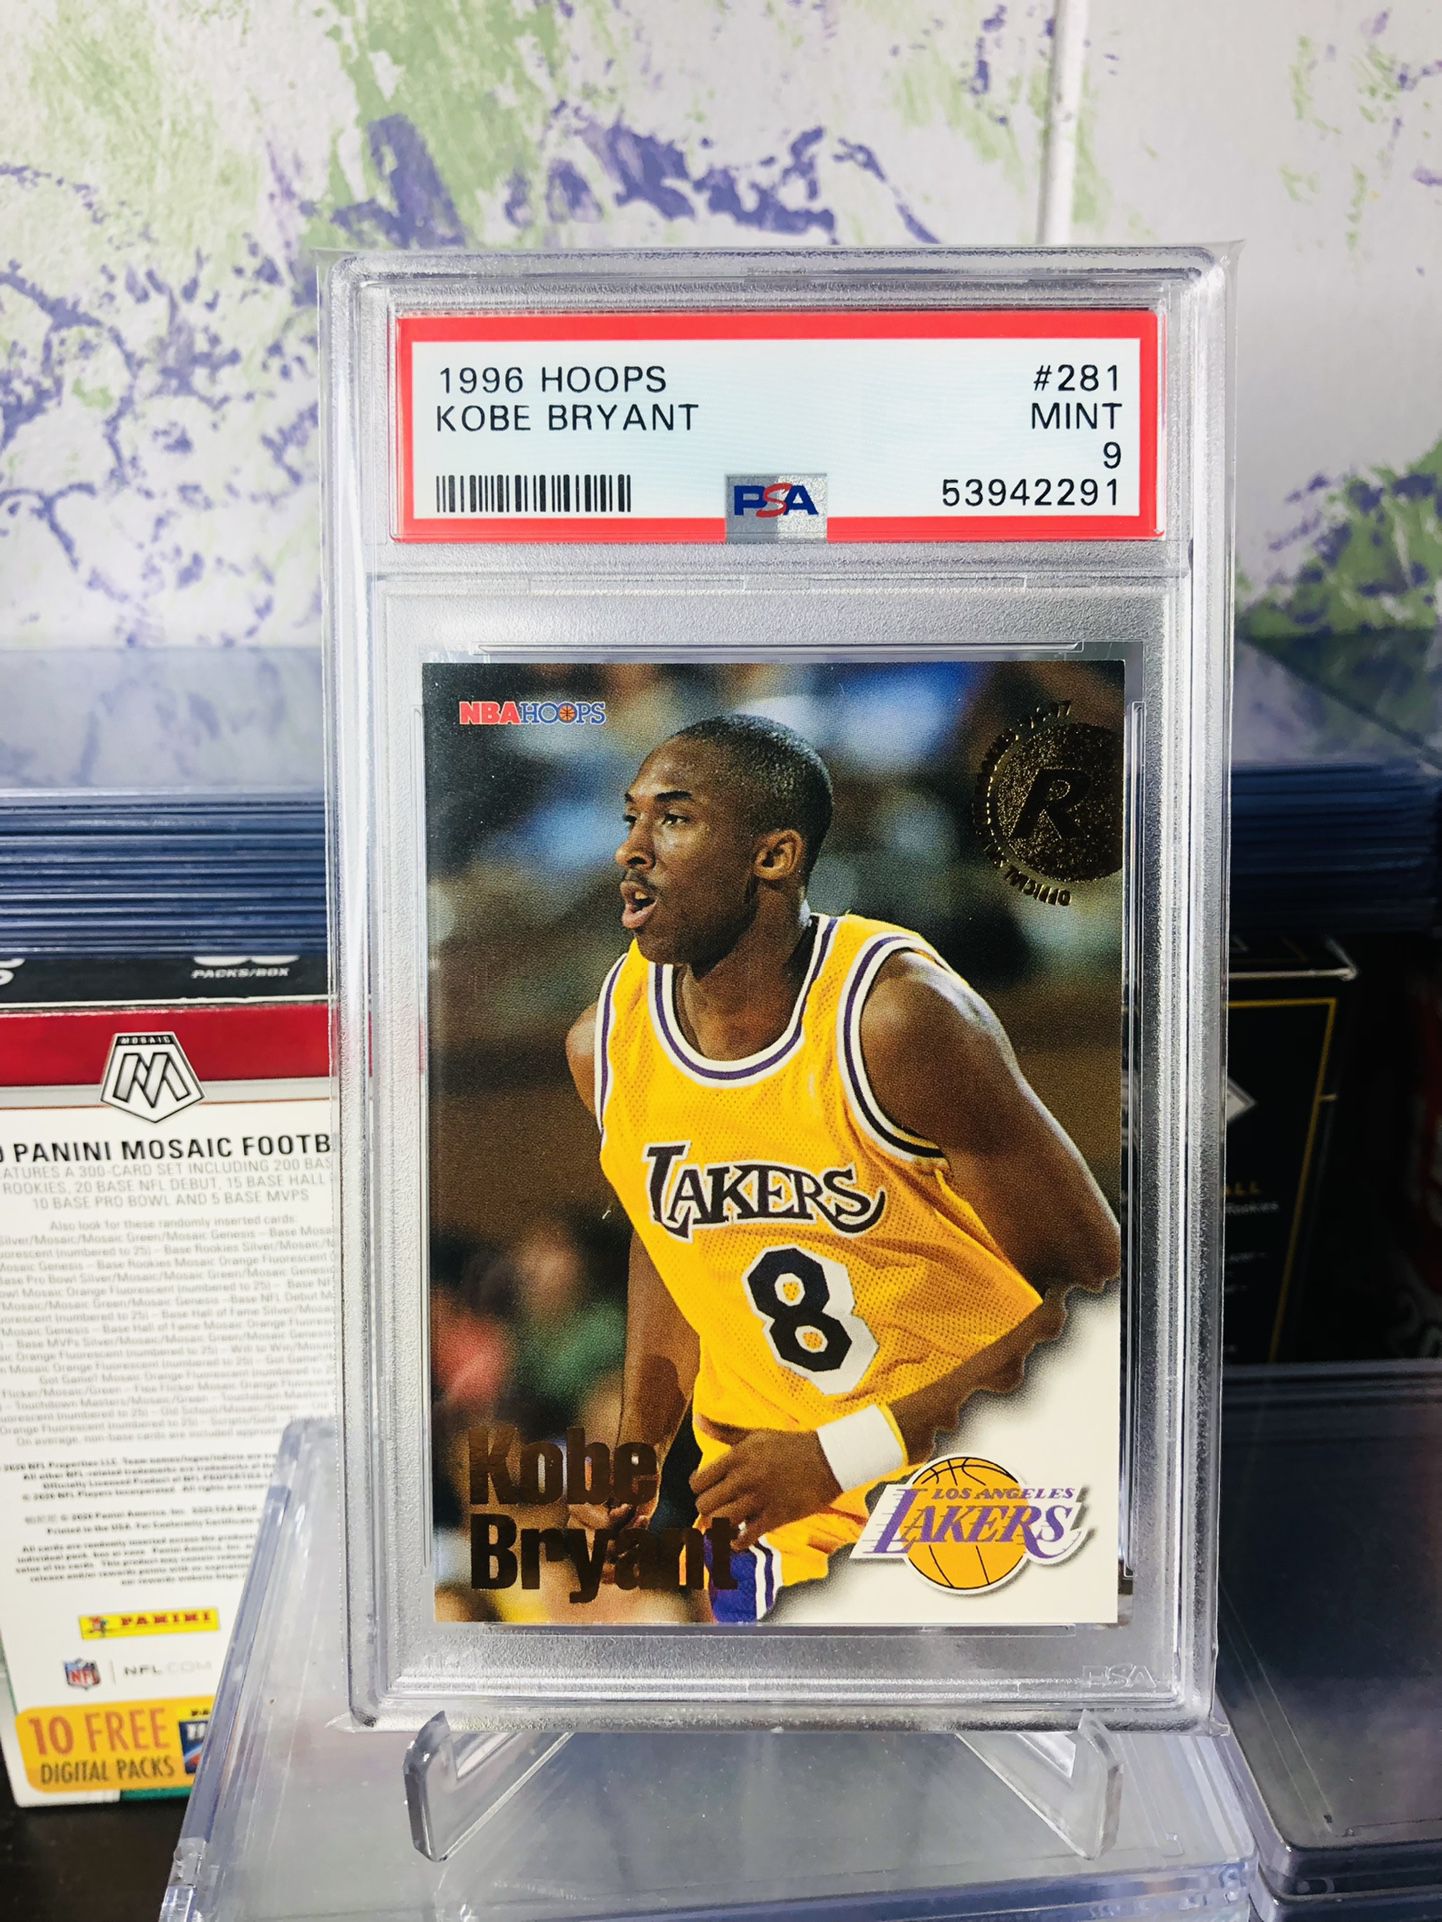 1996 Hoops Kobe Bryant Rookie Card graded 9 by PSA